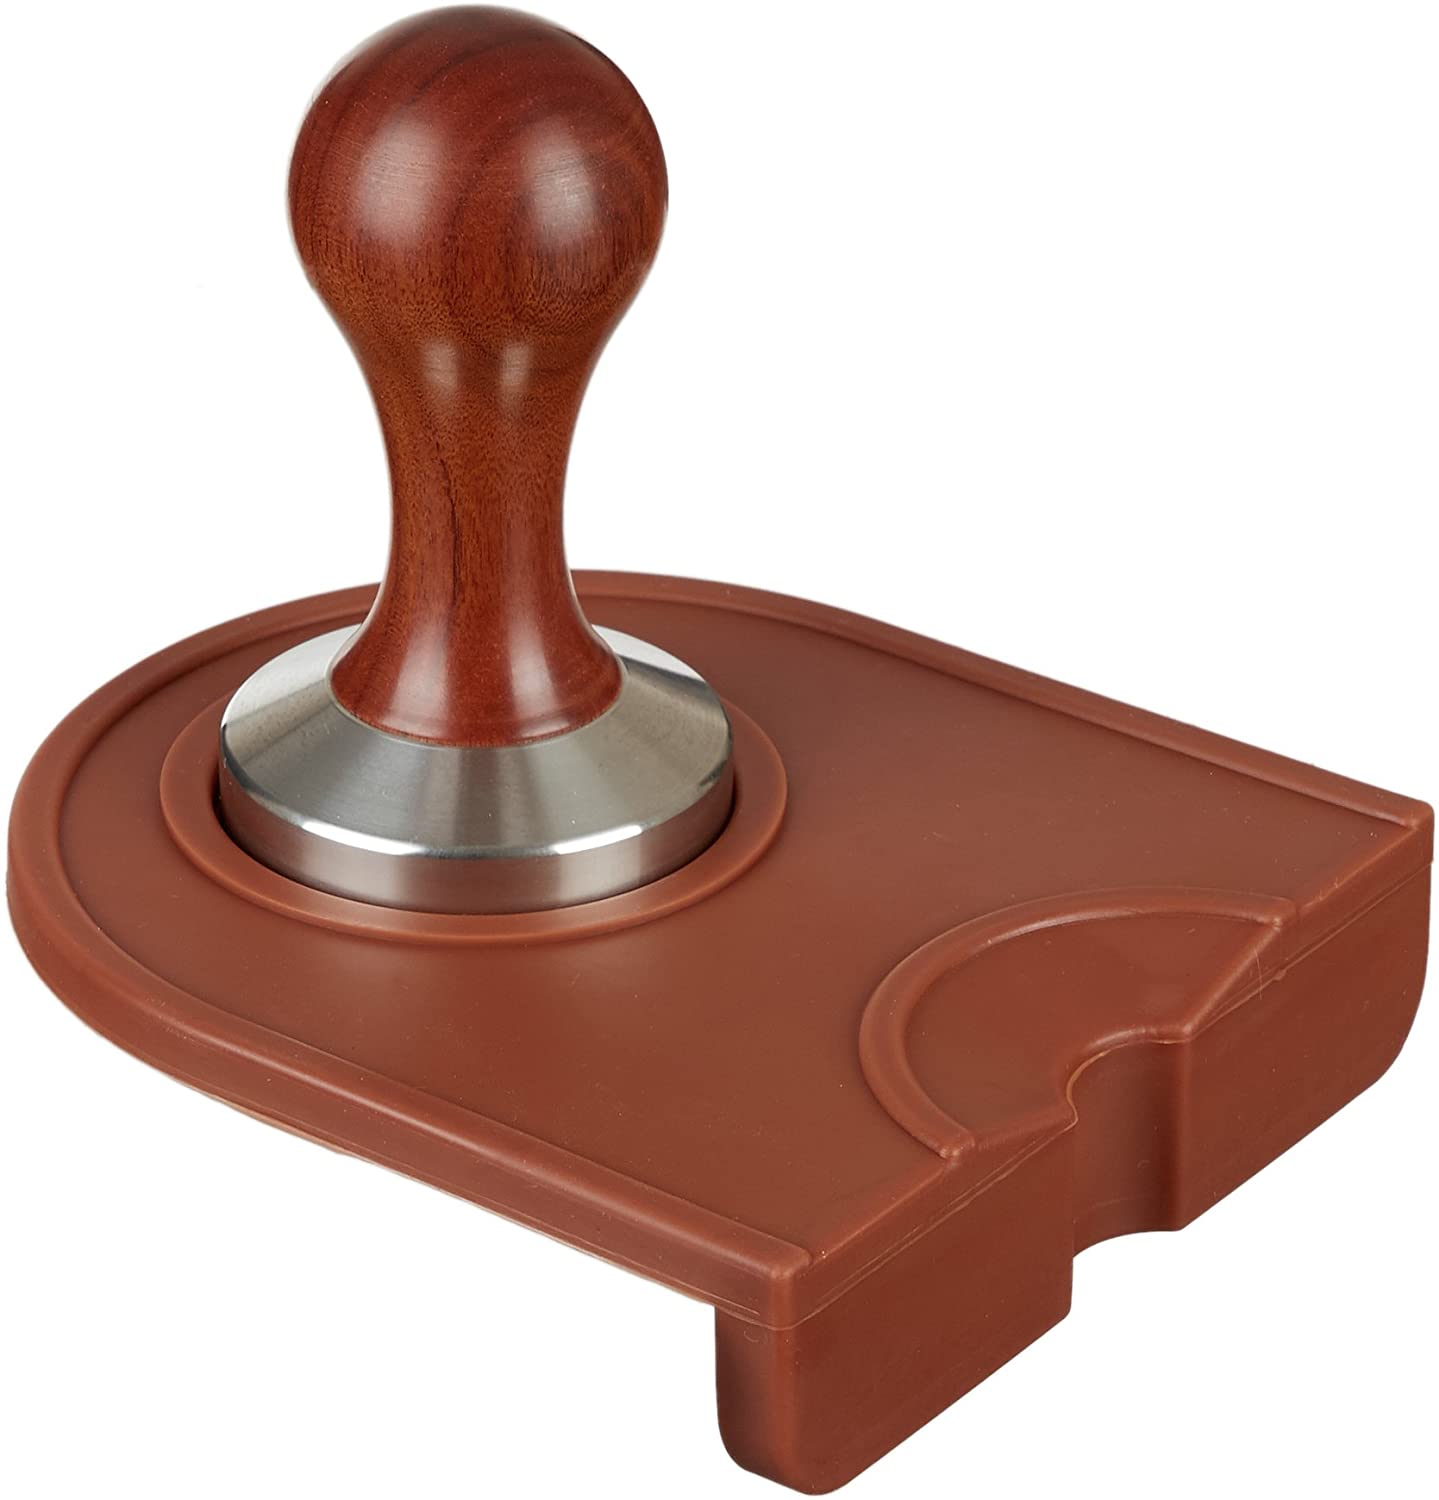 scarlet bijoux Scarlet Espresso Tamping Food-grade Silicone Professional Tamper Tray Mat for Worktop